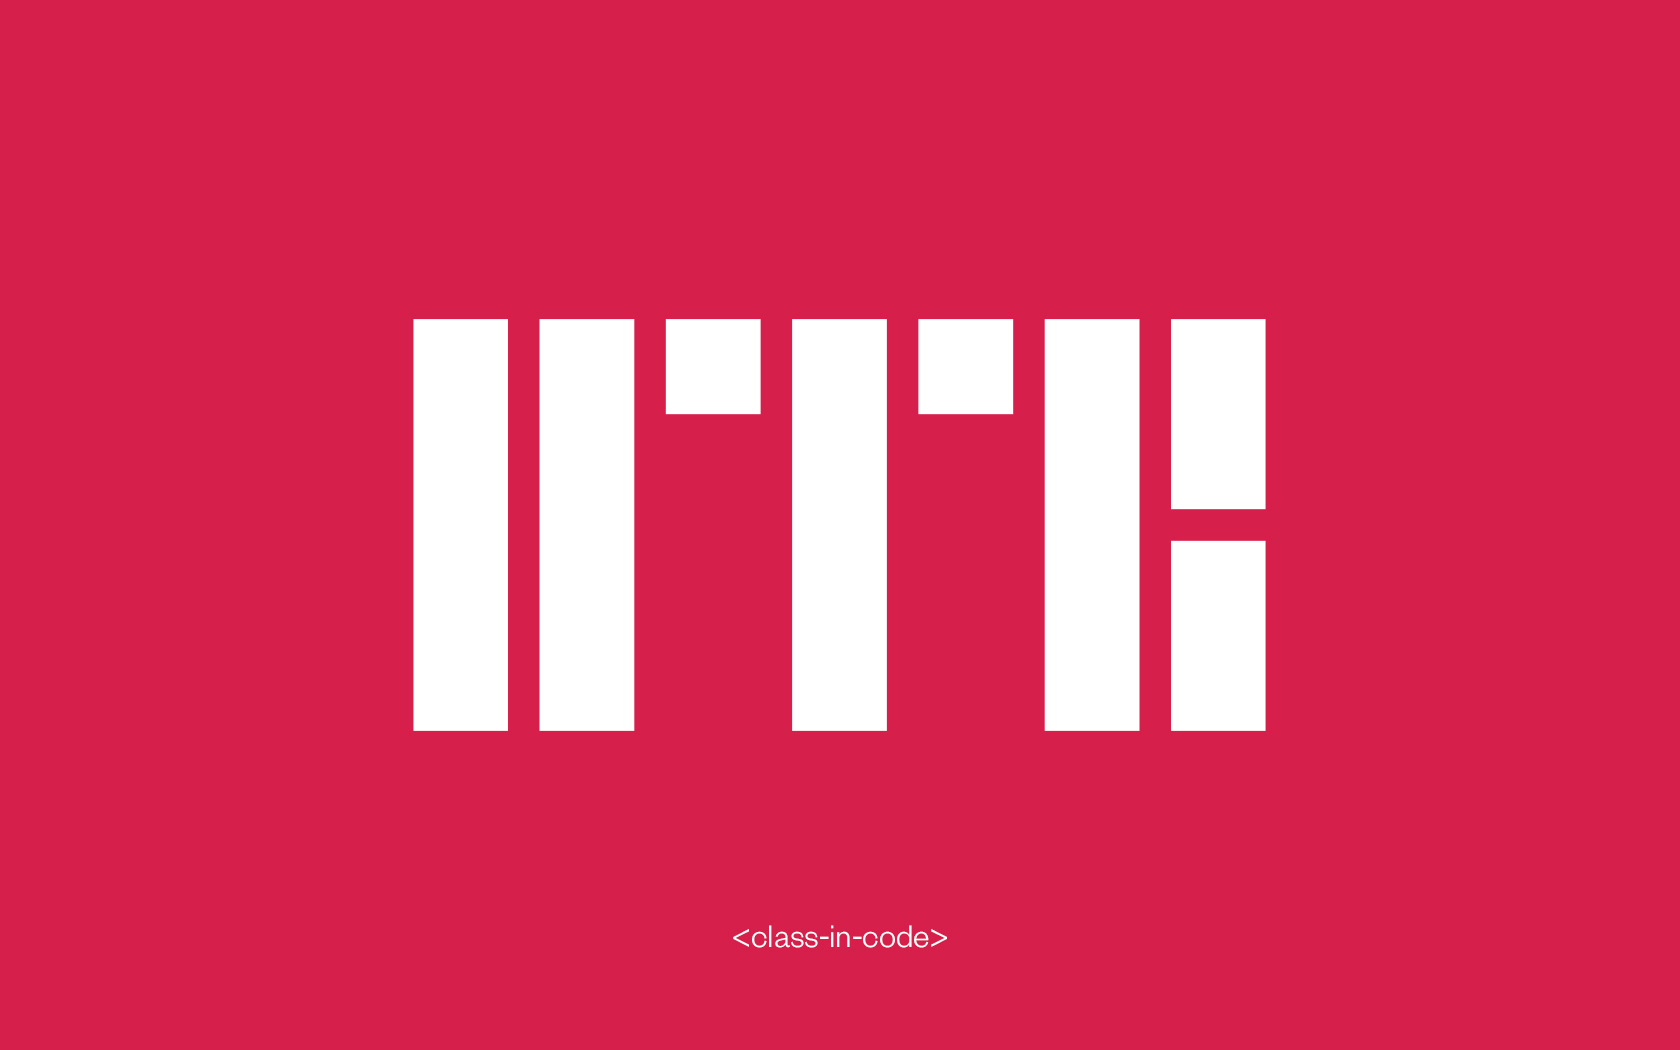 UTB. Brand logo in white on red background